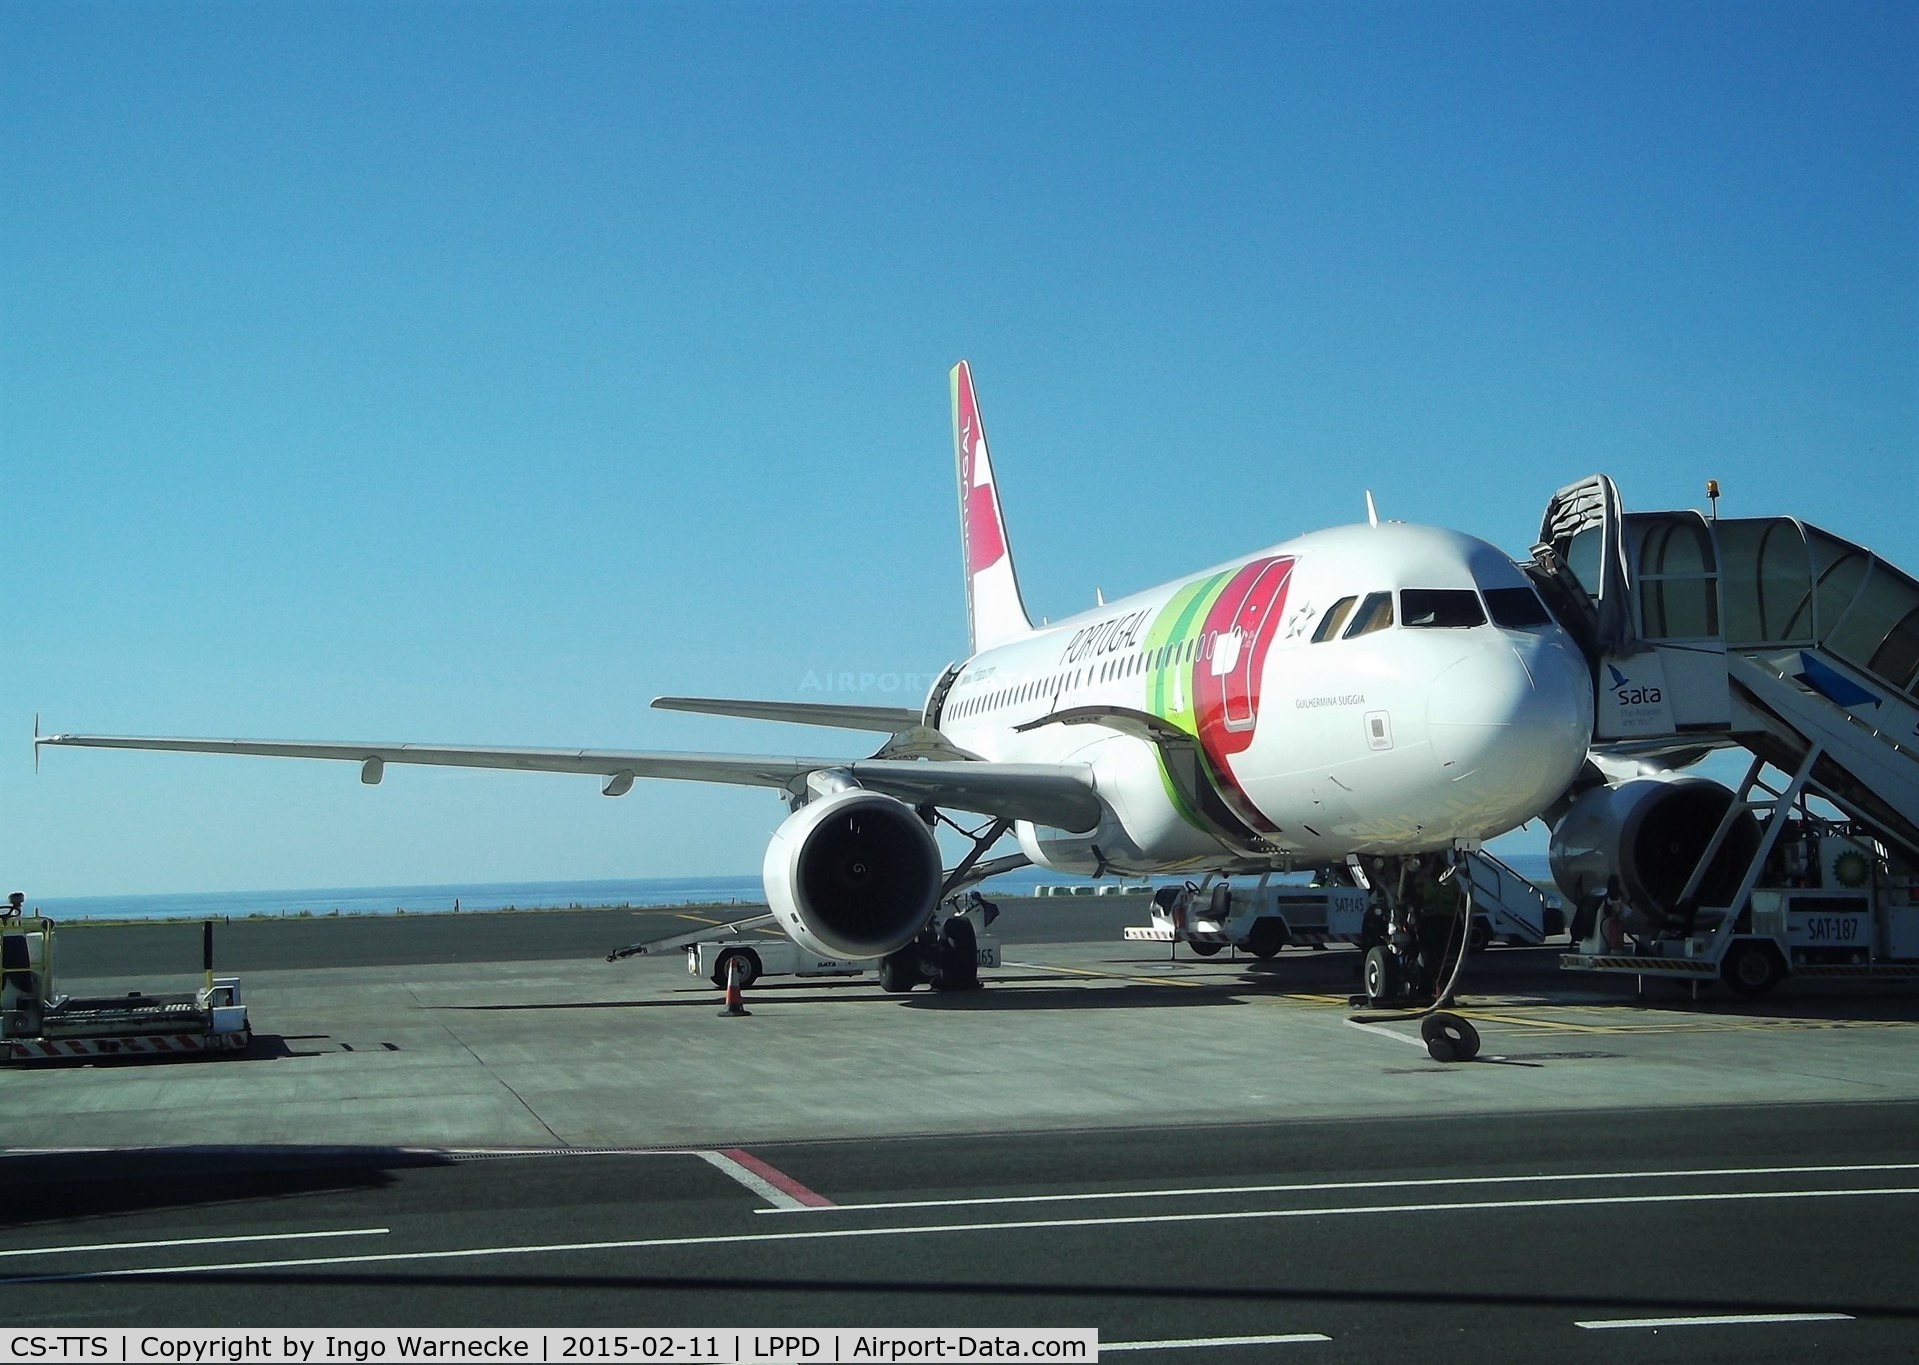 CS-TTS, 2002 Airbus A319-112 C/N 1765, Airbus A319-112 of TAP at Ponta Delgada airport, Sao Miguel / Azores